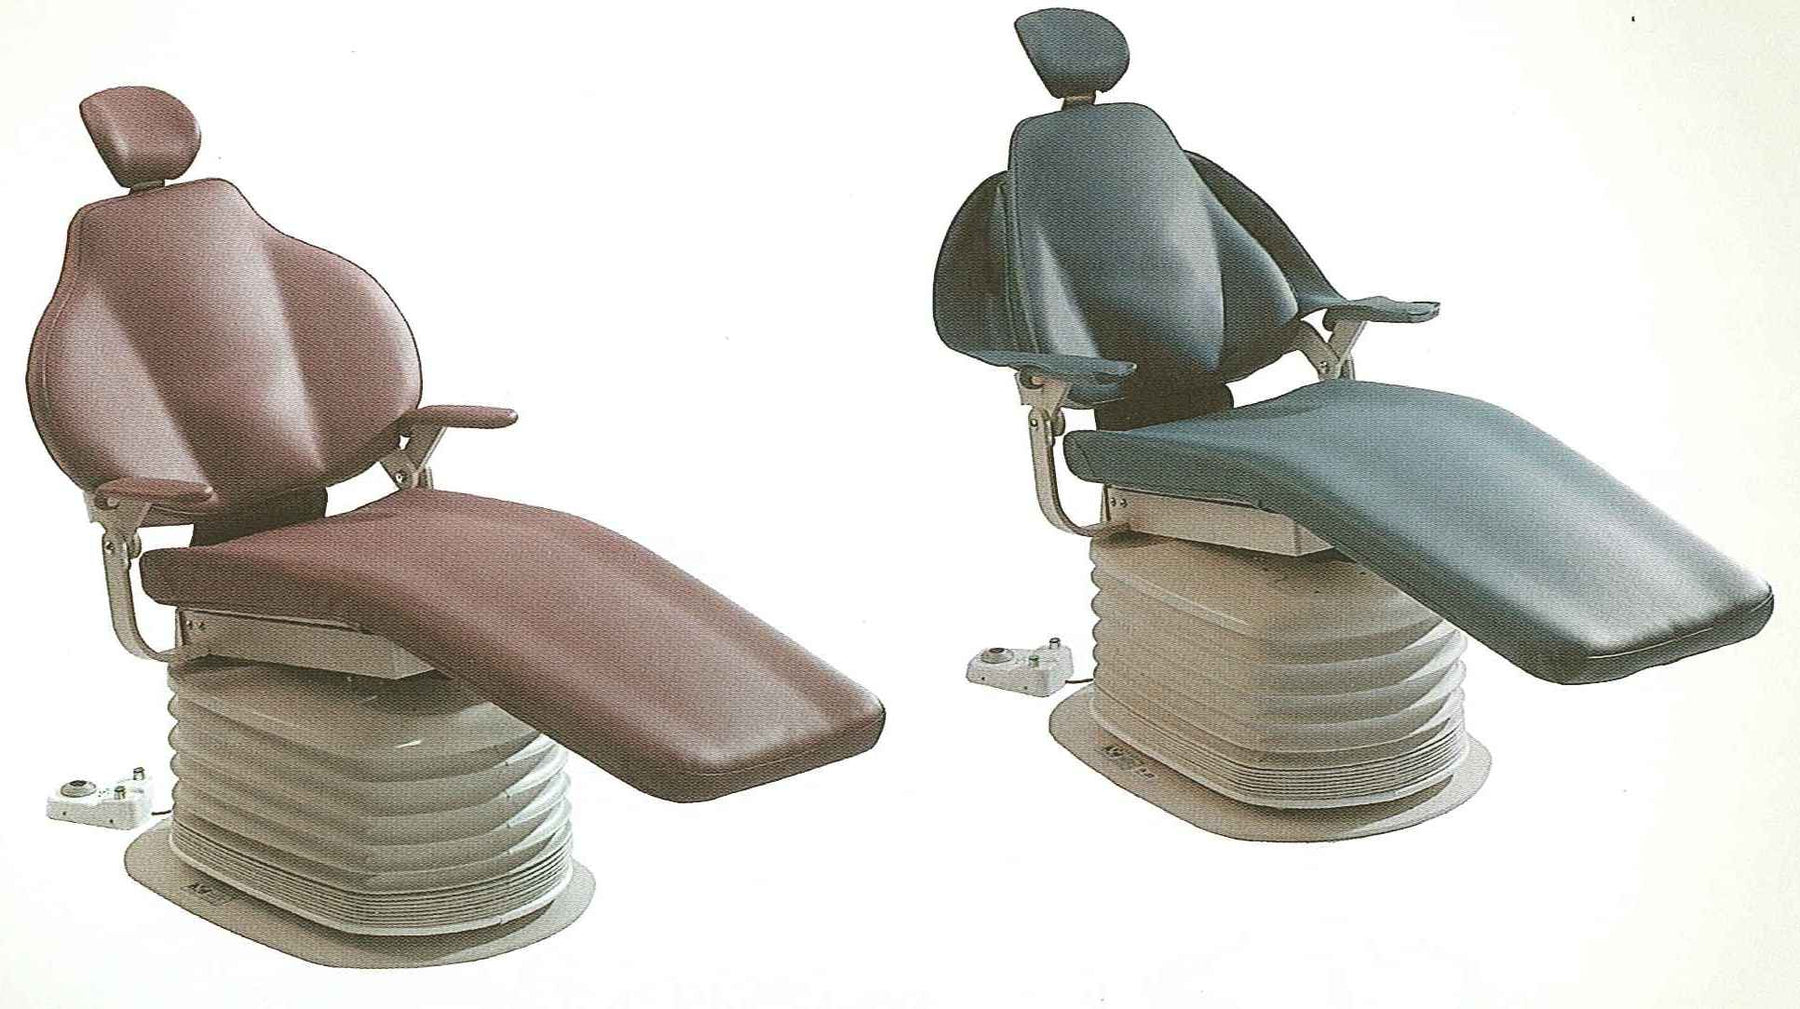 Evolution 2 Dental Chair Refurbished Dental Equipment with Warranty